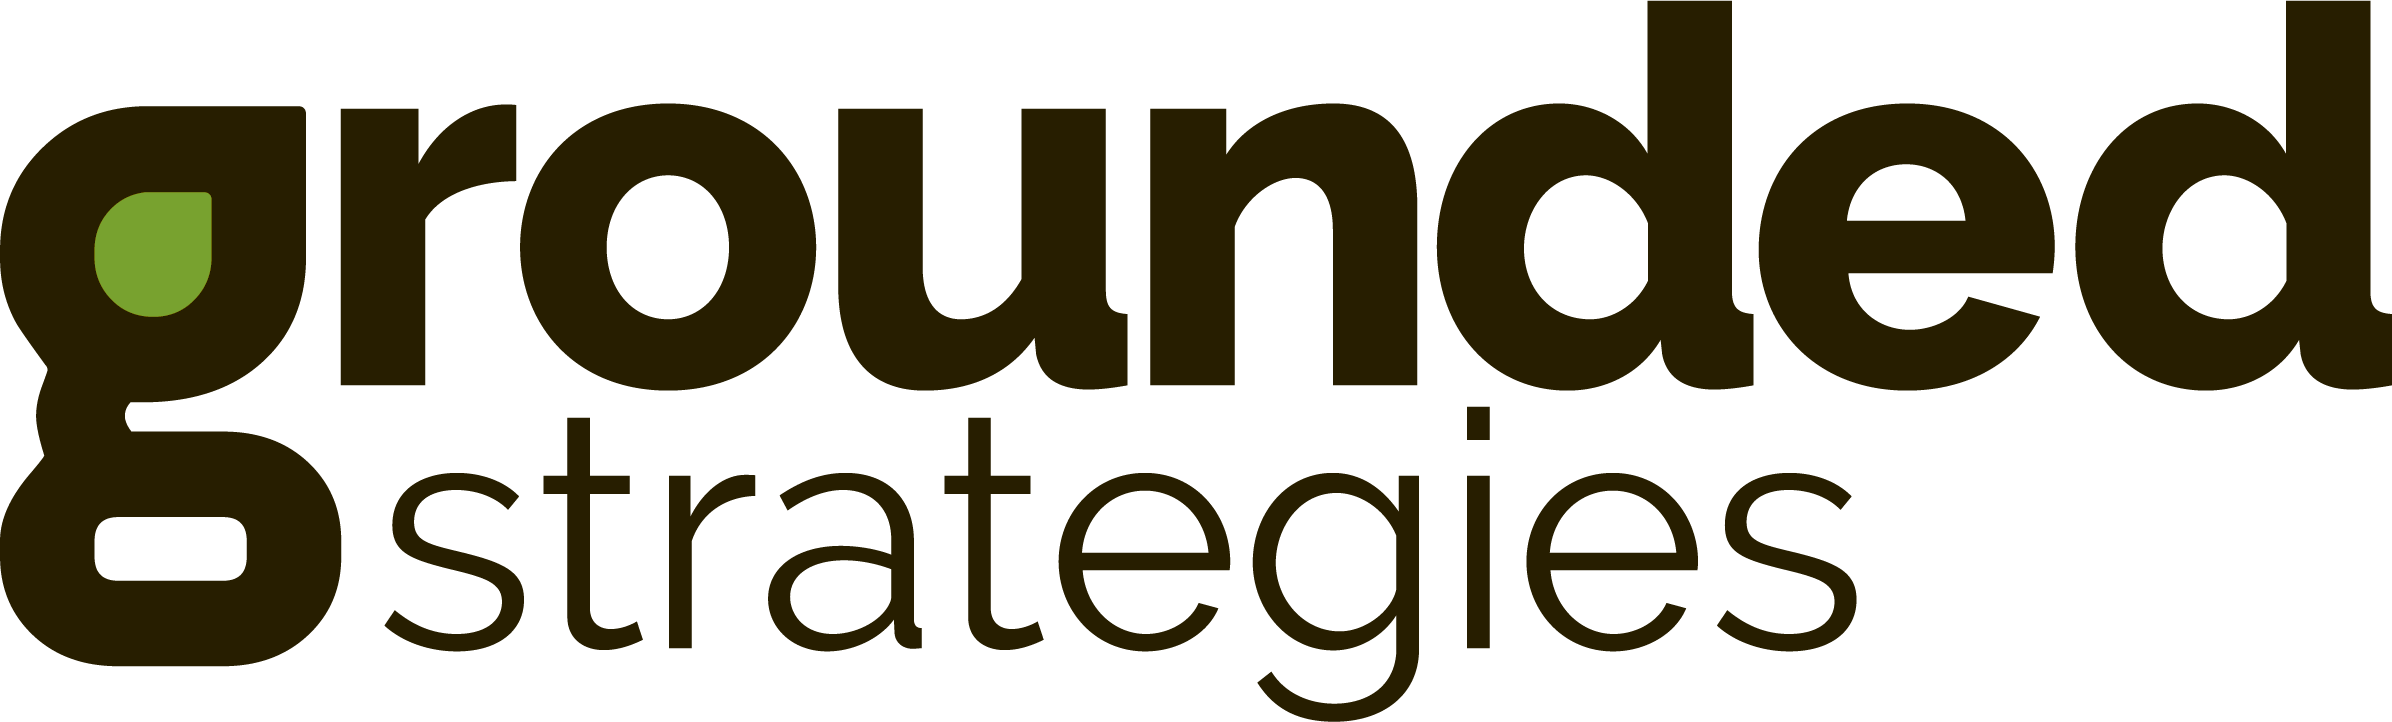 Grounded Strategies logo